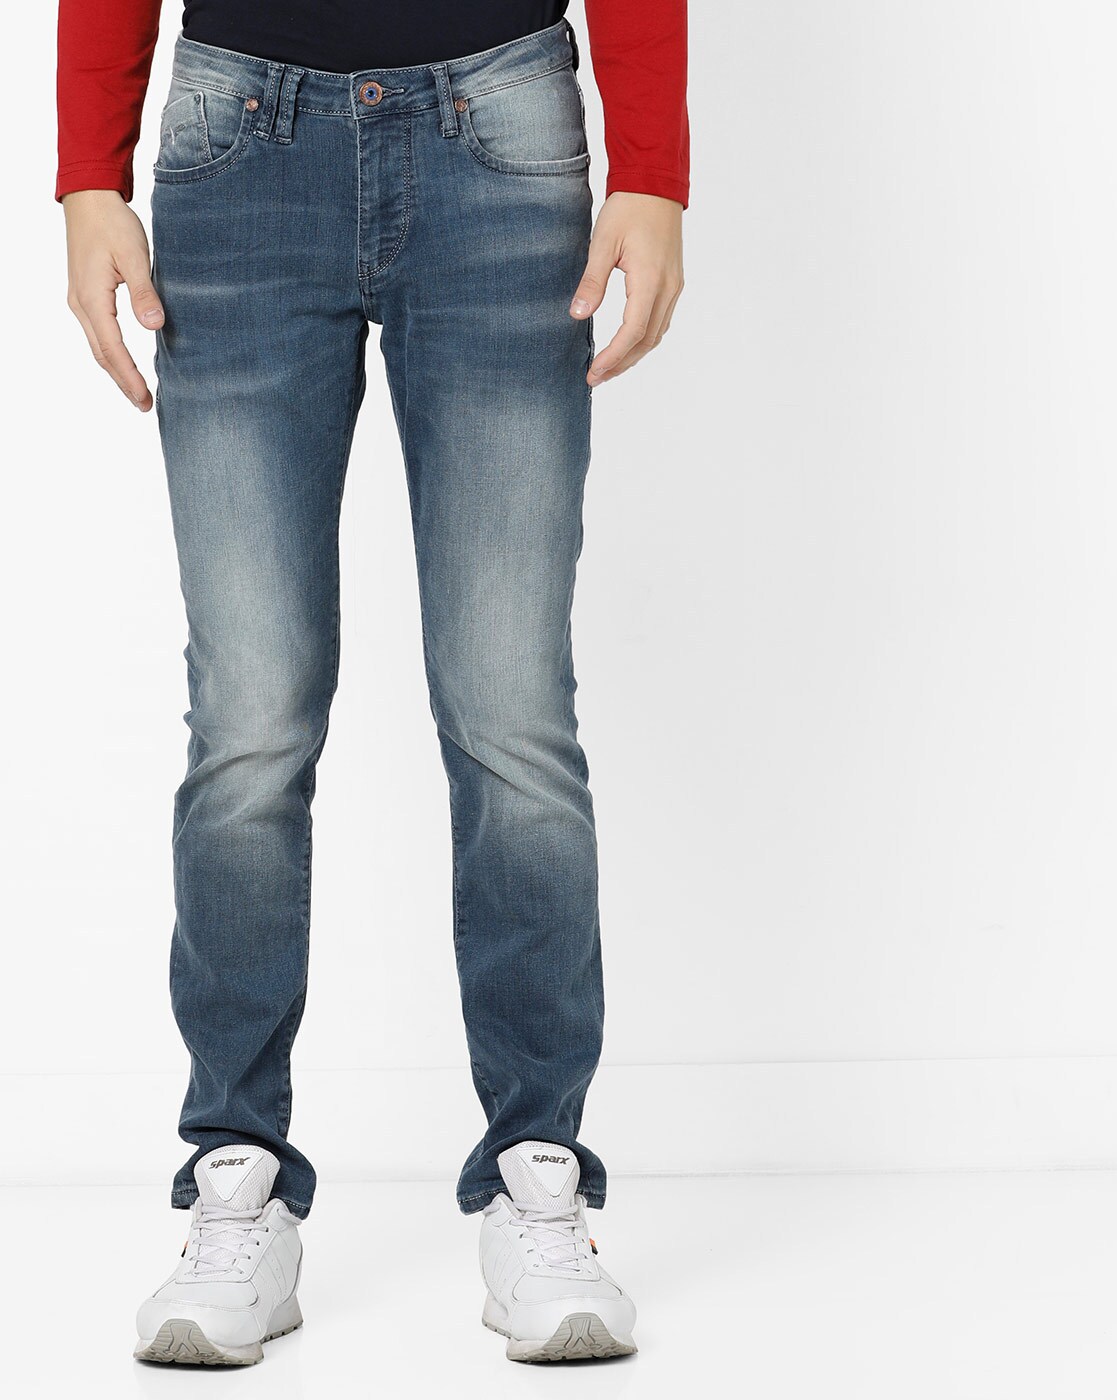 sparx jeans